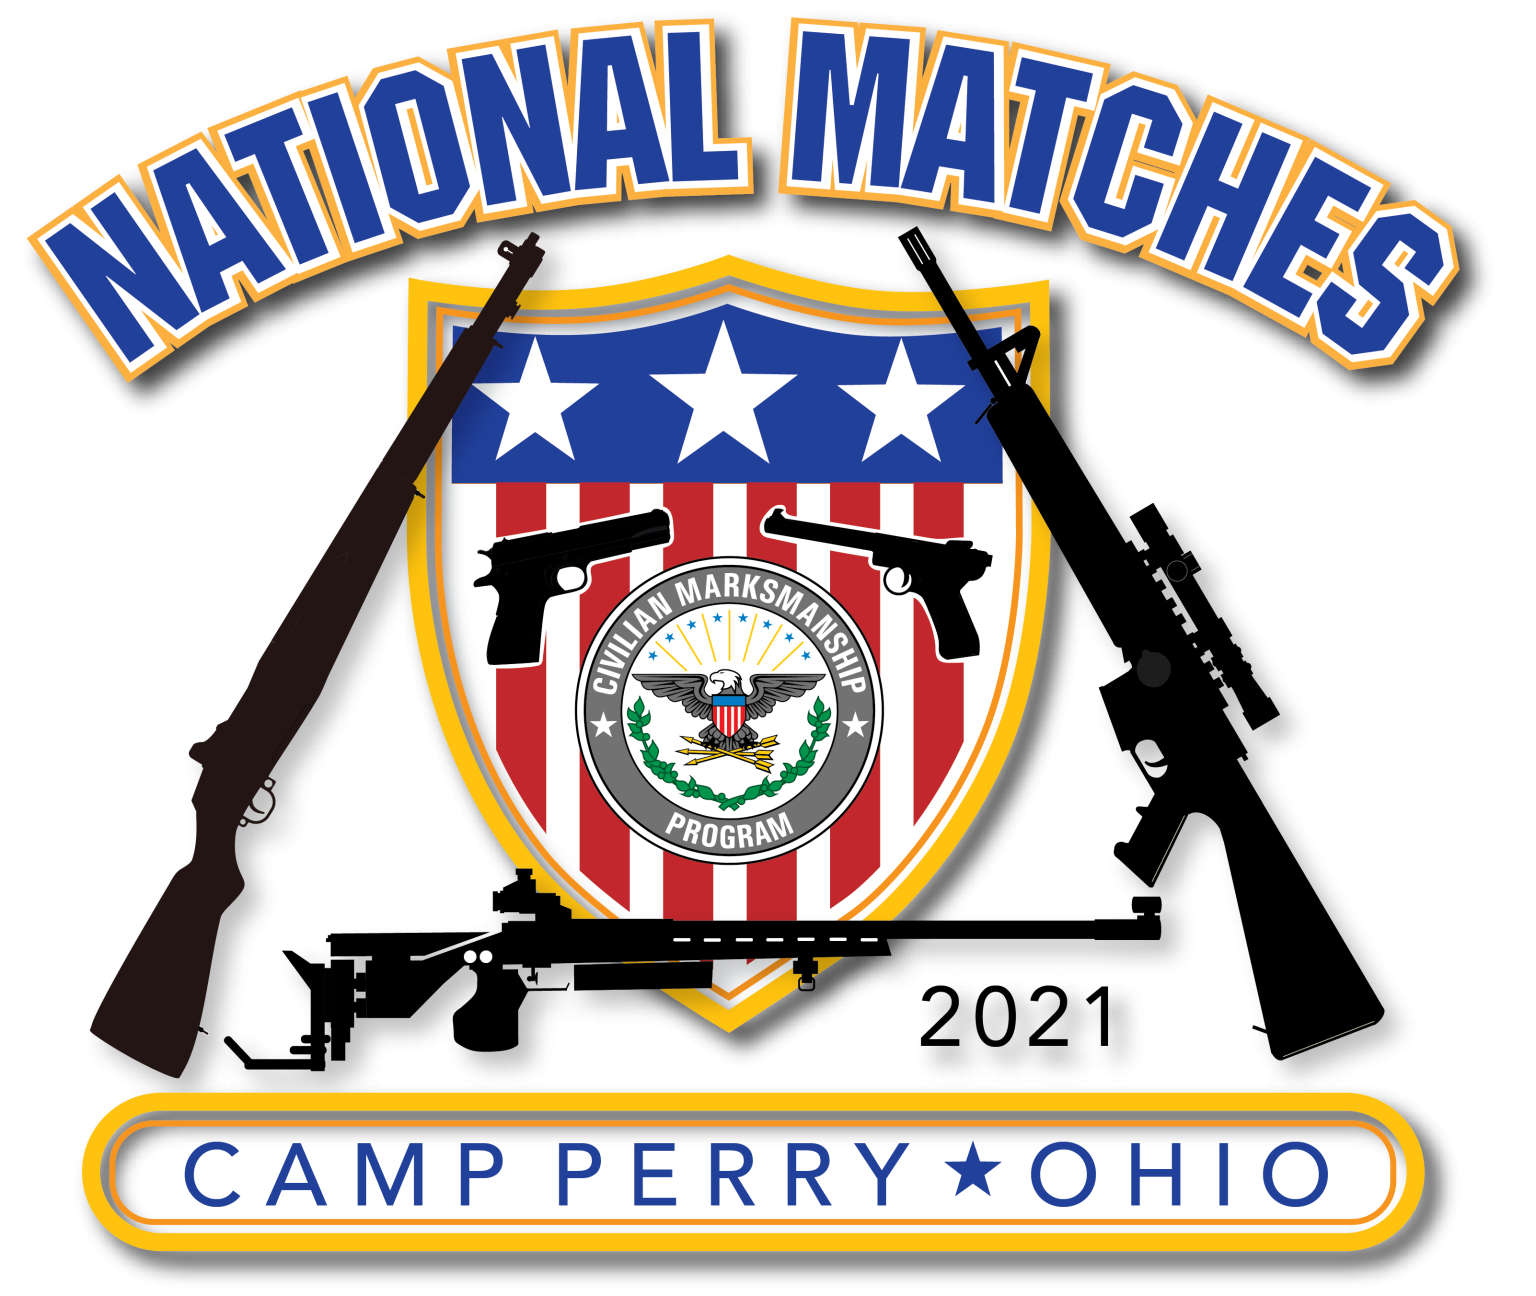 National Matches Civilian Marksmanship Program